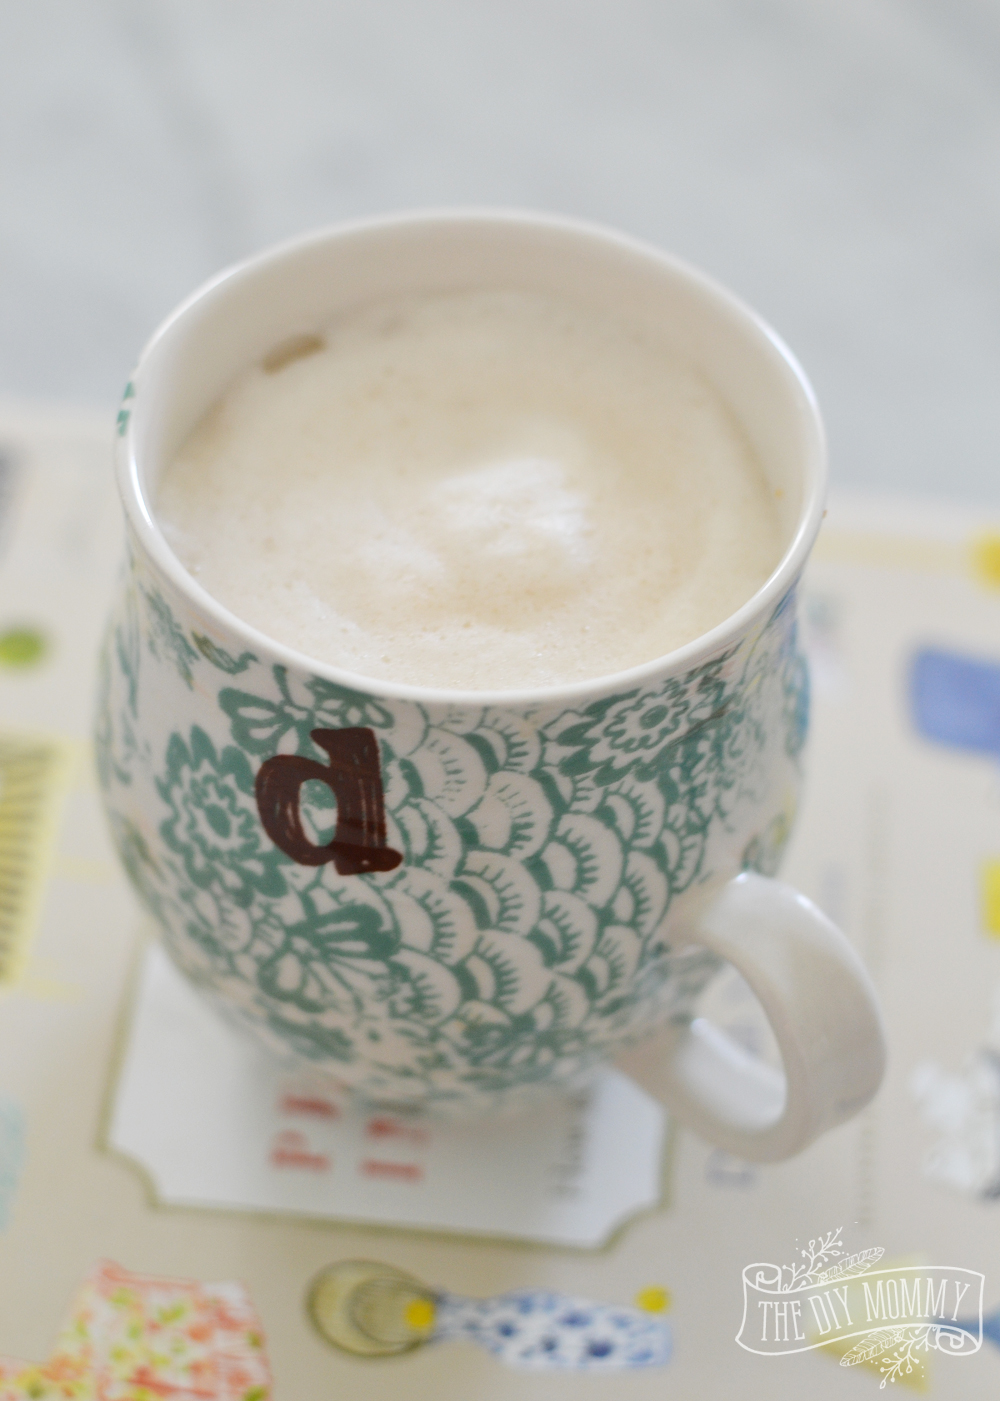 How to Make a Maple London Fog (Earl Grey Tea Latte)